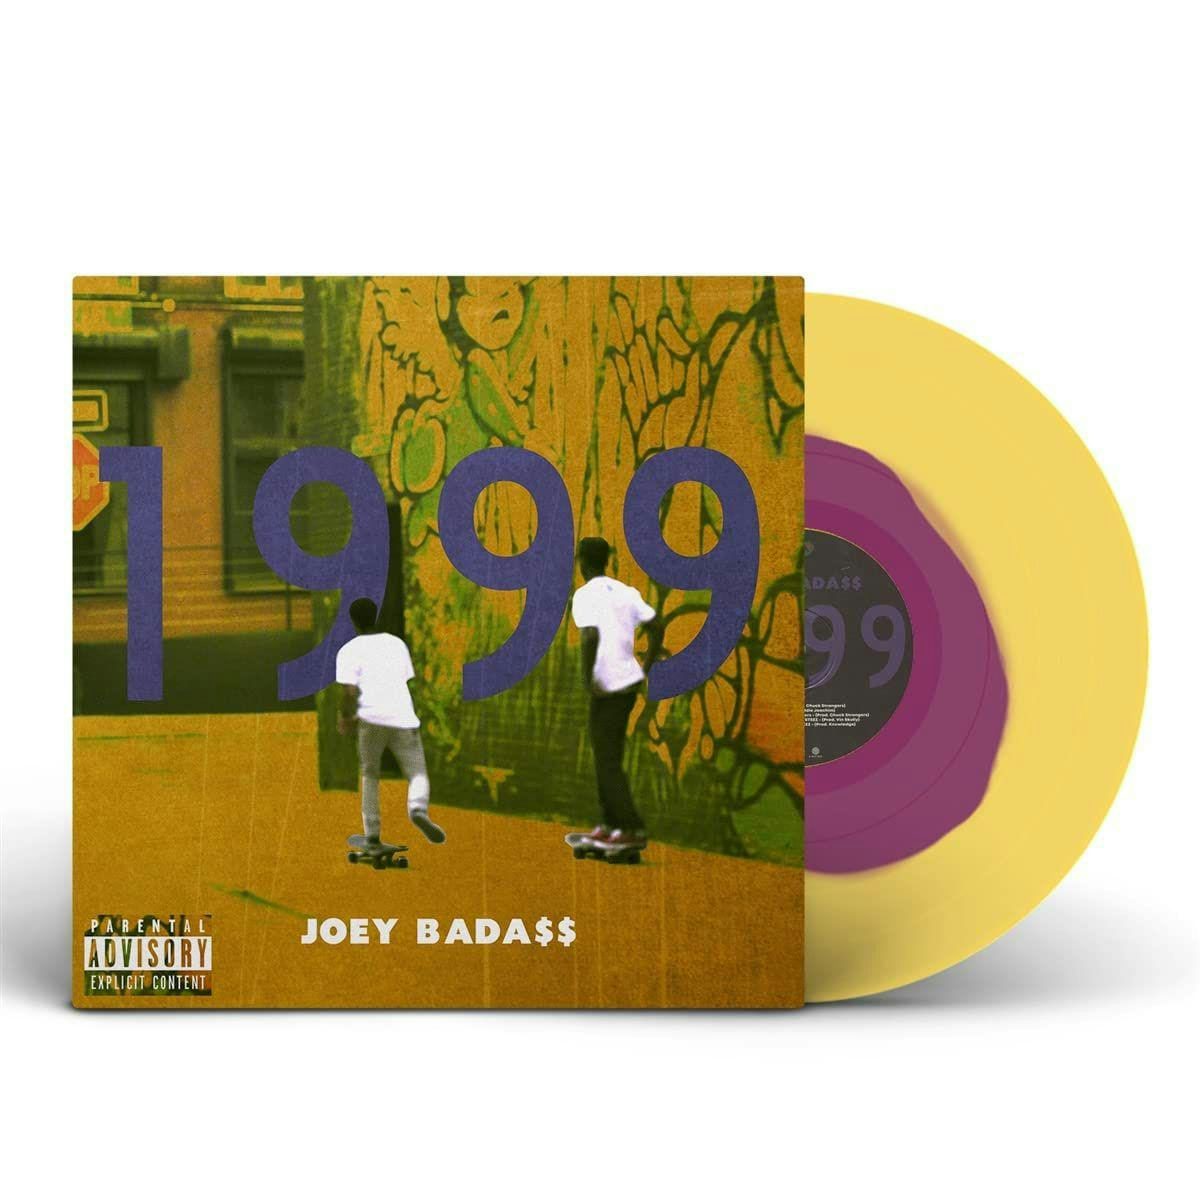 Joey Badass 1999 (Purple In Tan Color/2LP) Vinyl Record